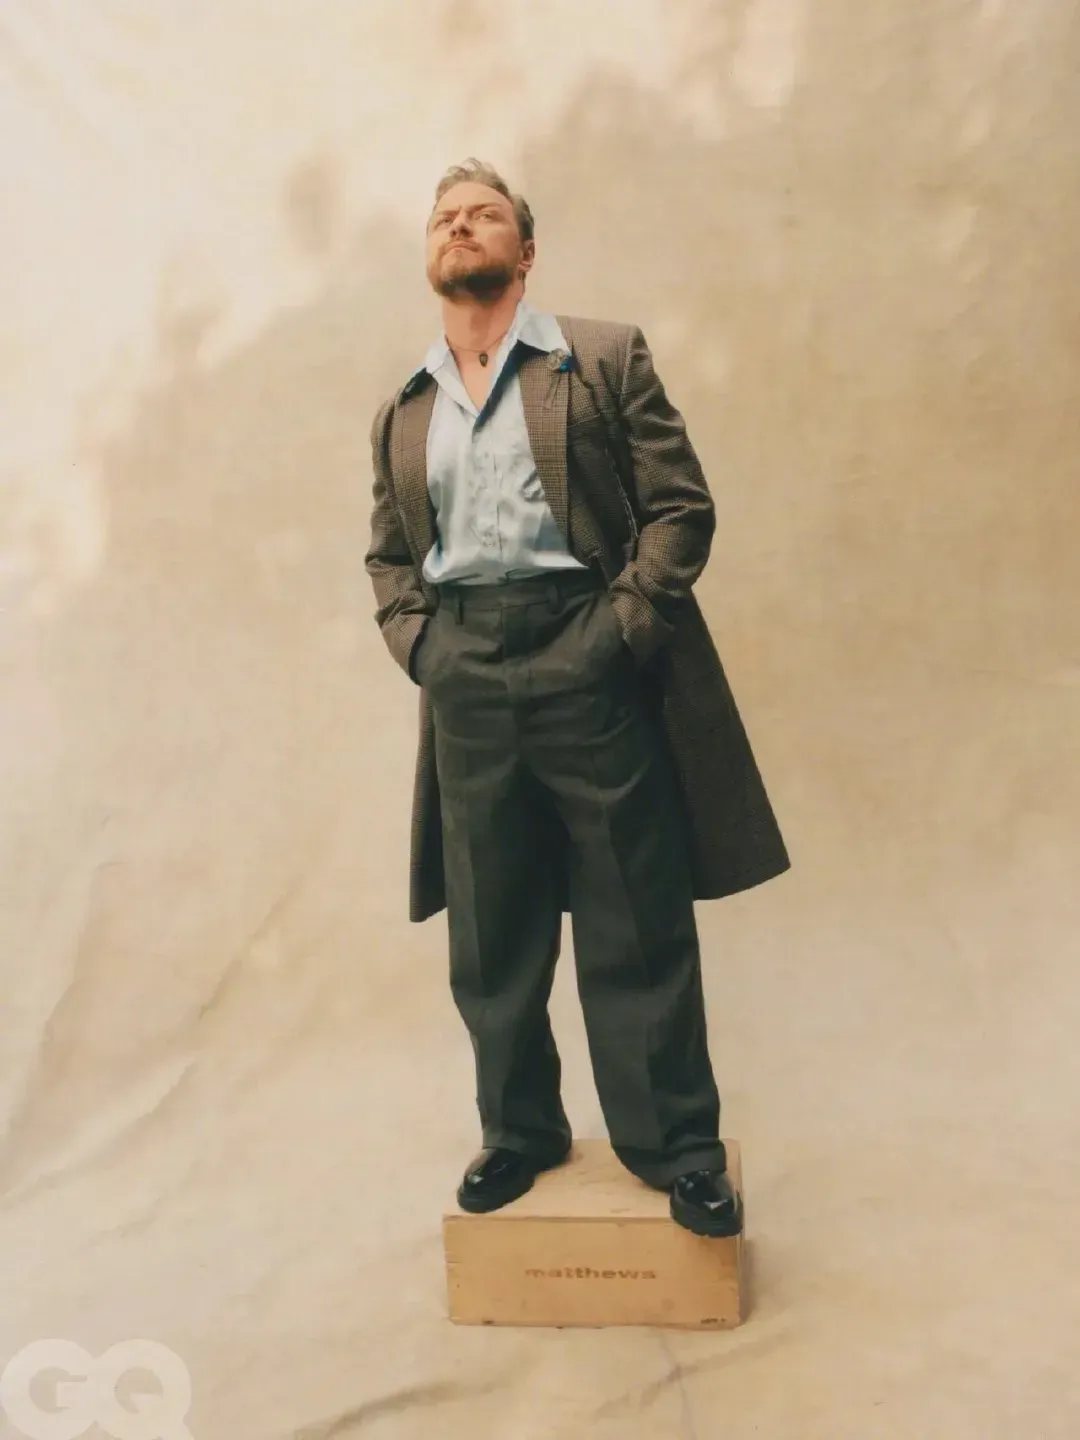 James McAvoy, new photoshoot for 'GQ Hype' magazine | FMV6